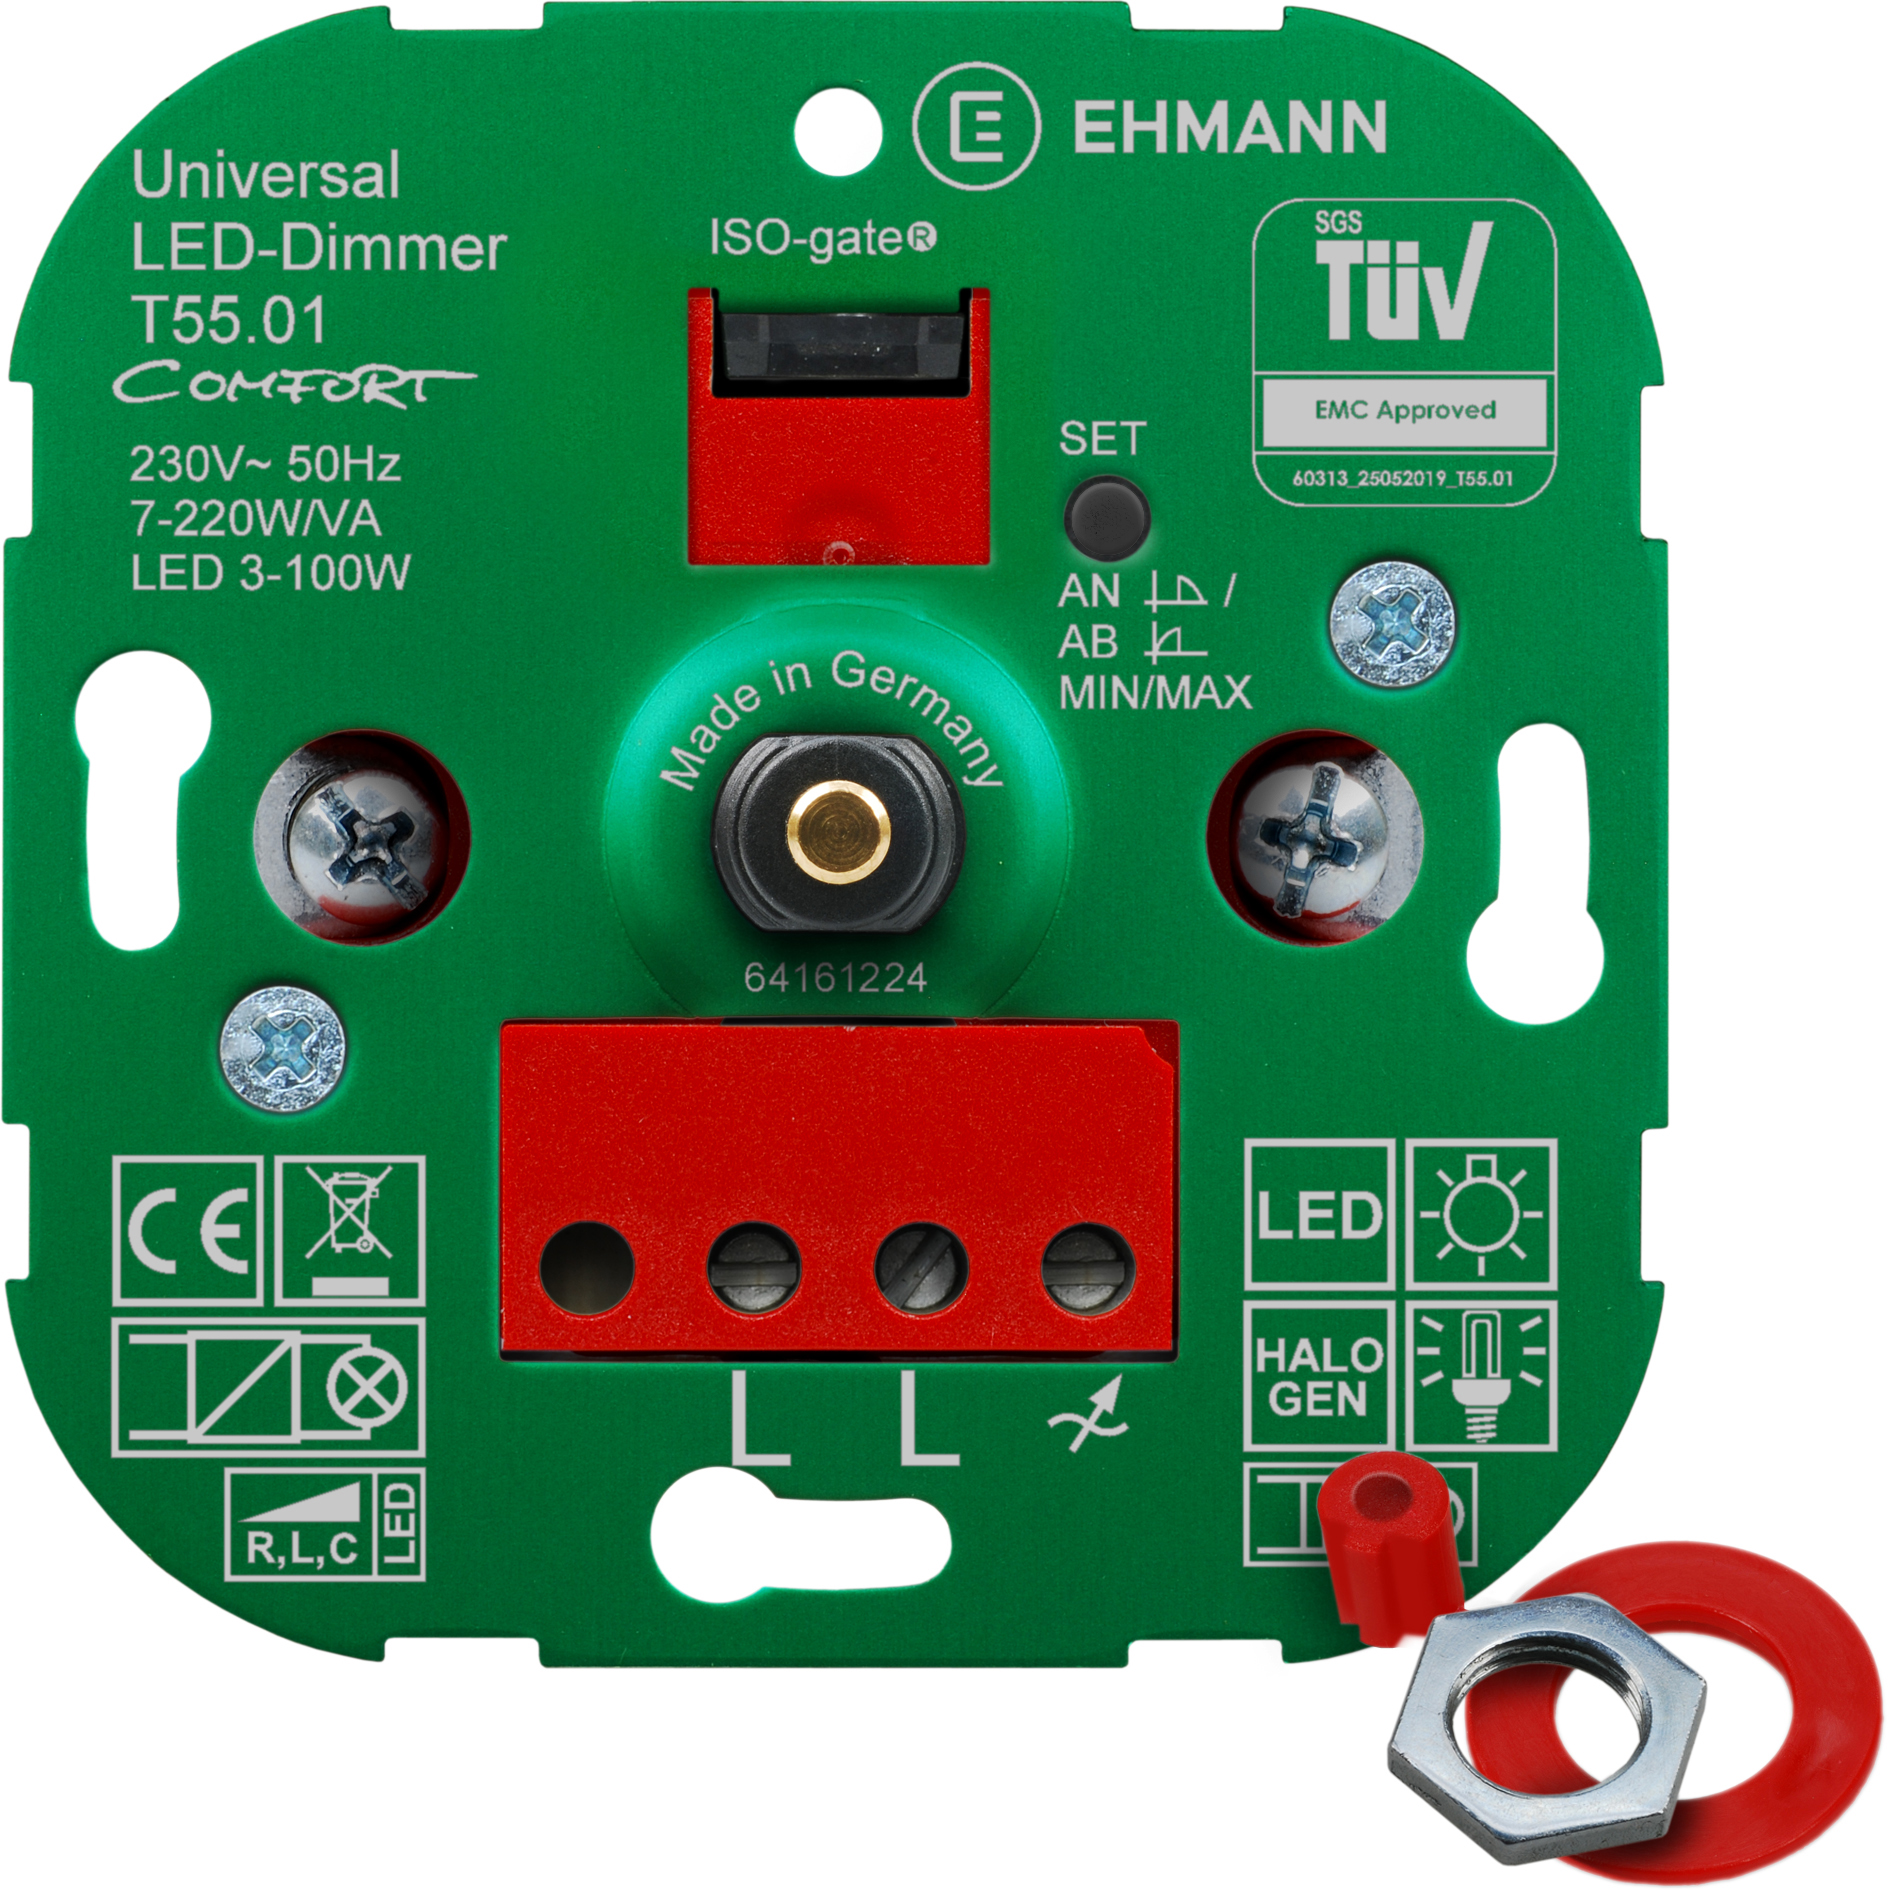 Universal LED Unterputz-Dimmer  Comfort T55.01 - Komplettgerät